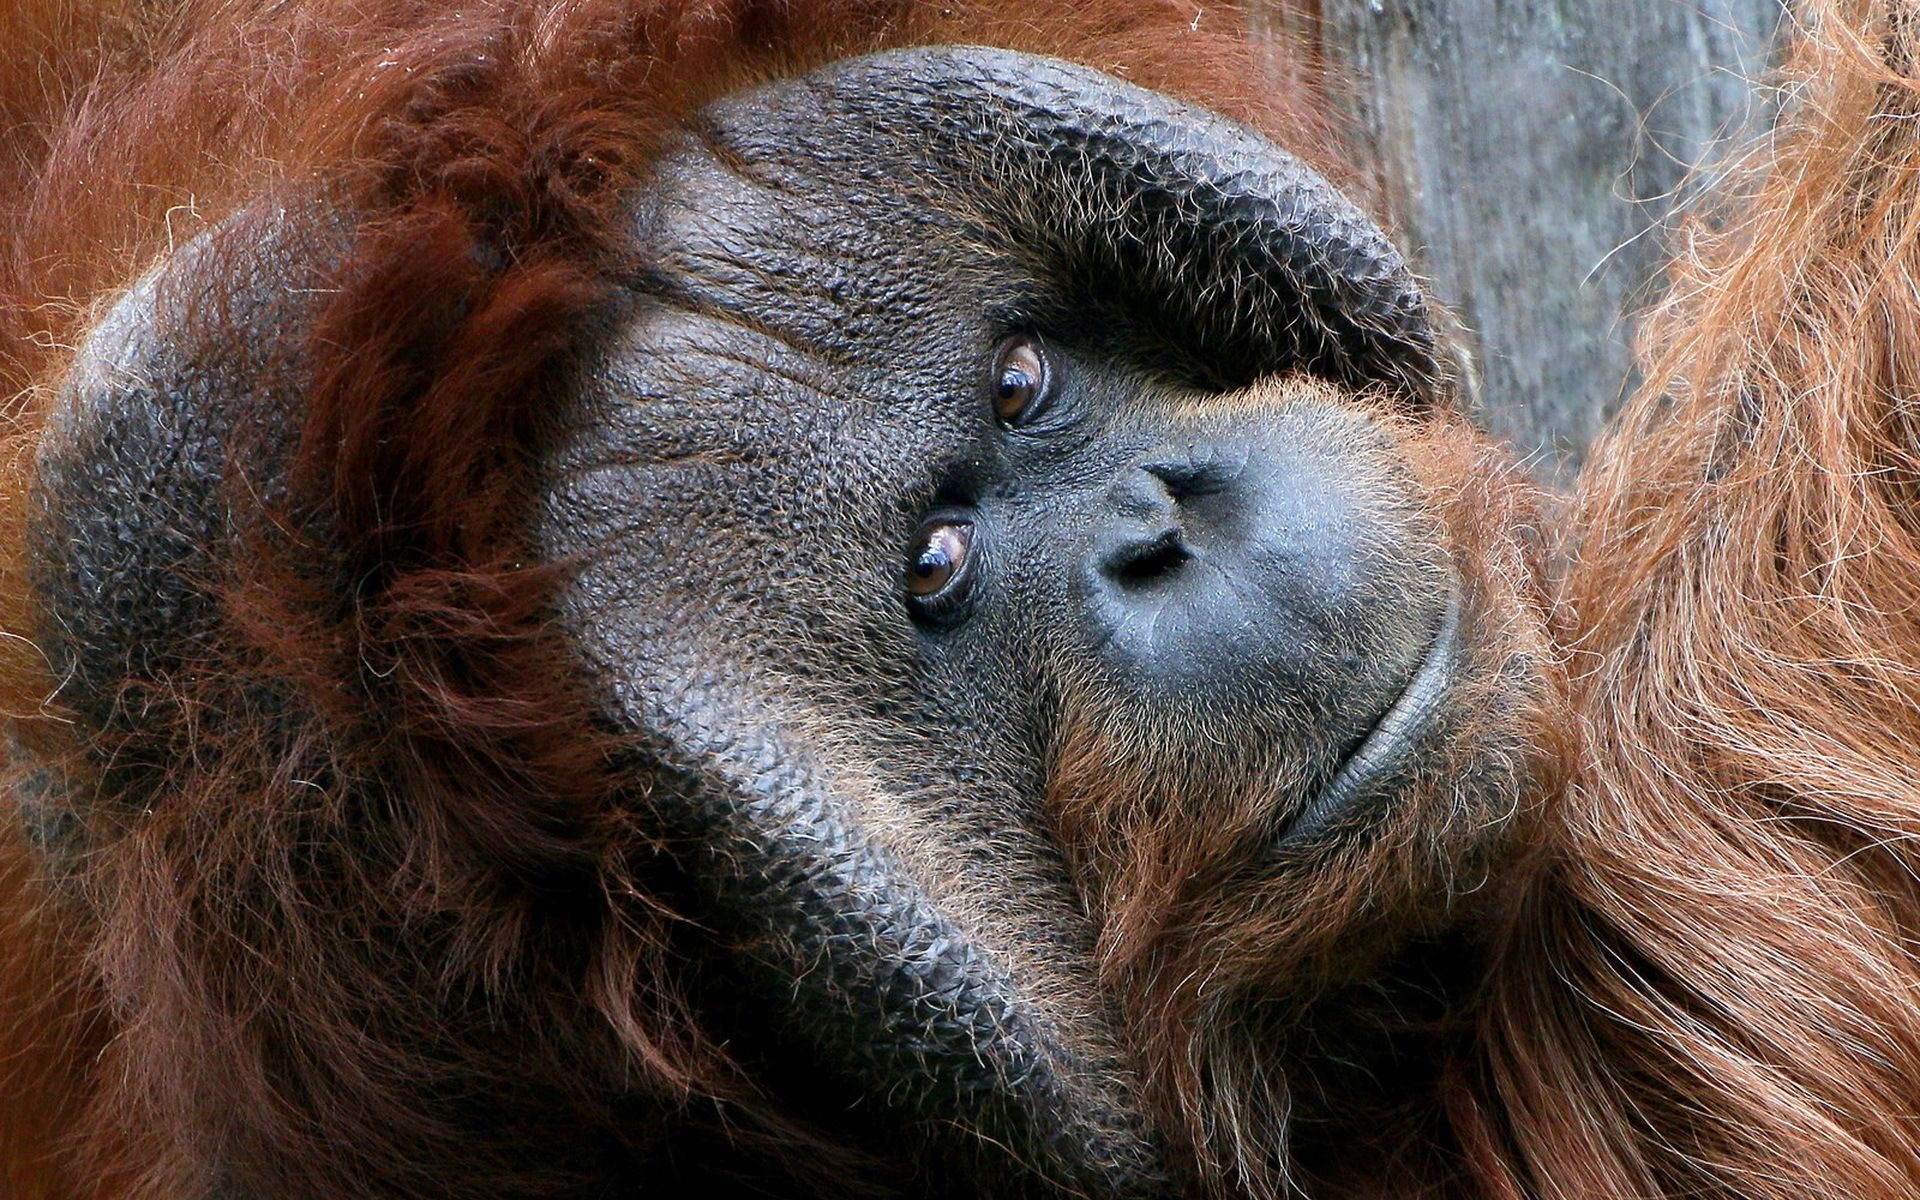 Orangutan, Primate world, Desktop wallpapers, High-quality images, 1920x1200 HD Desktop